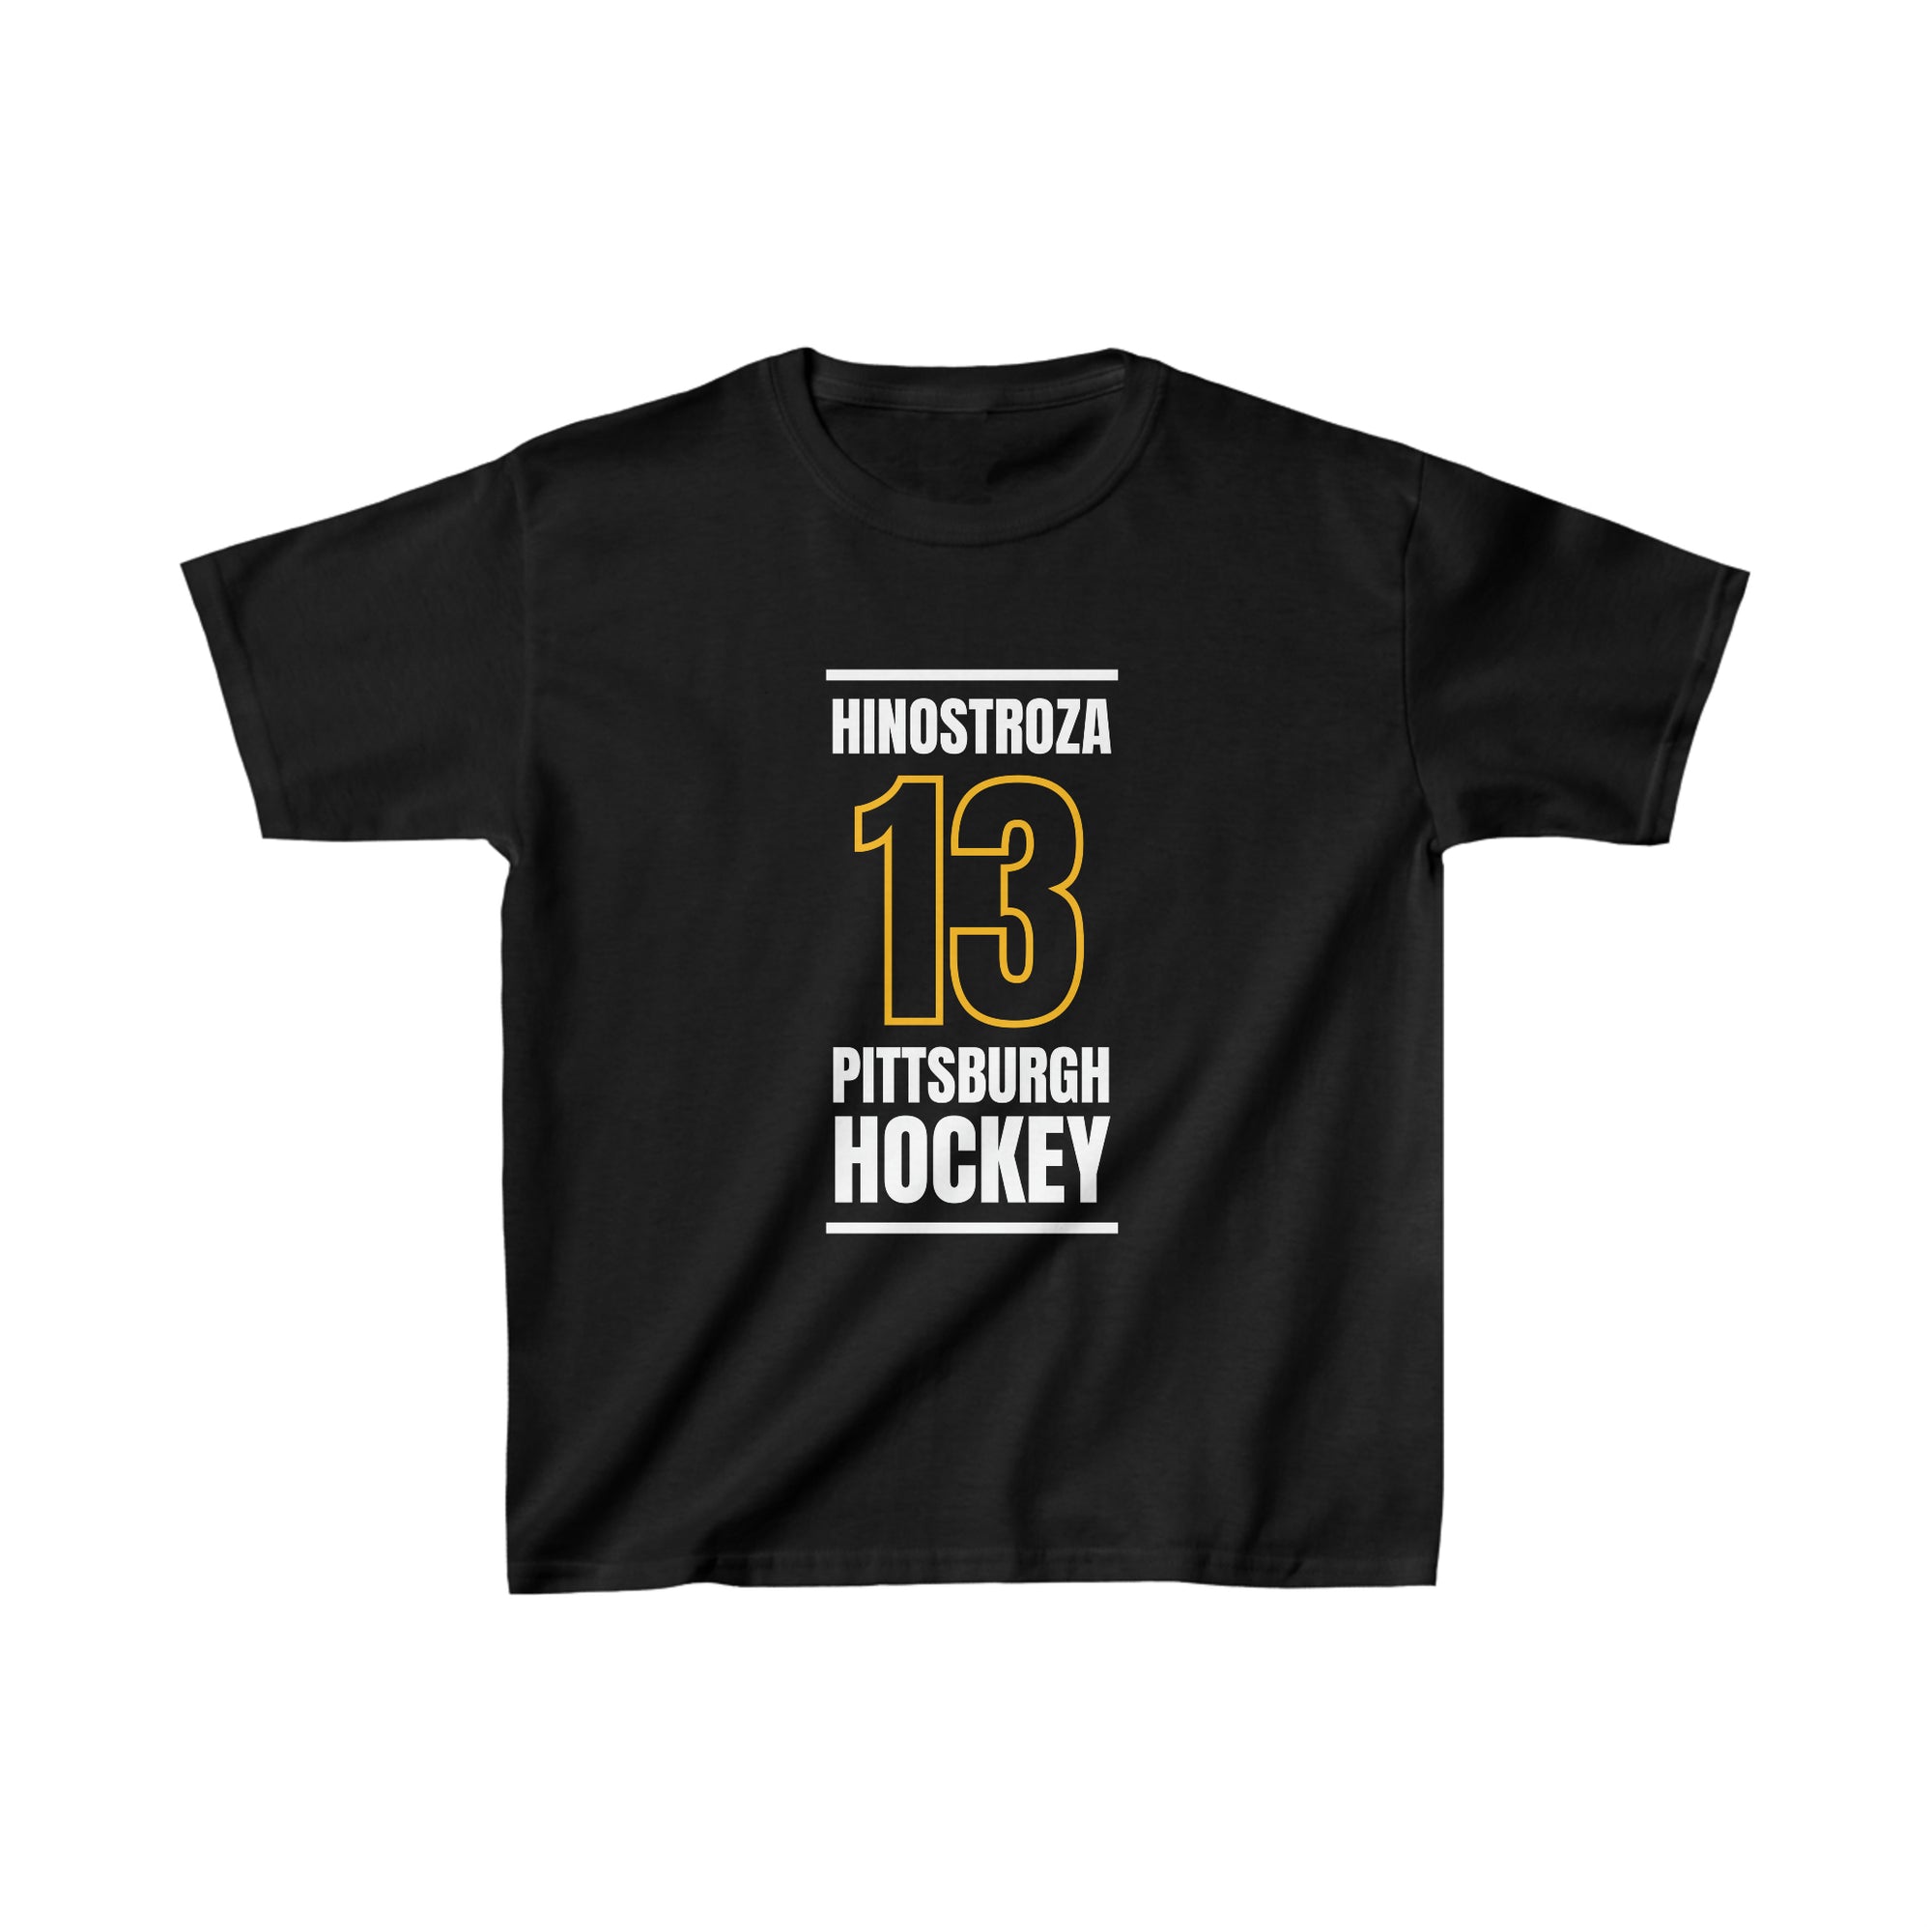 Hinostroza 13 Pittsburgh Hockey Black Vertical Design Kids Tee